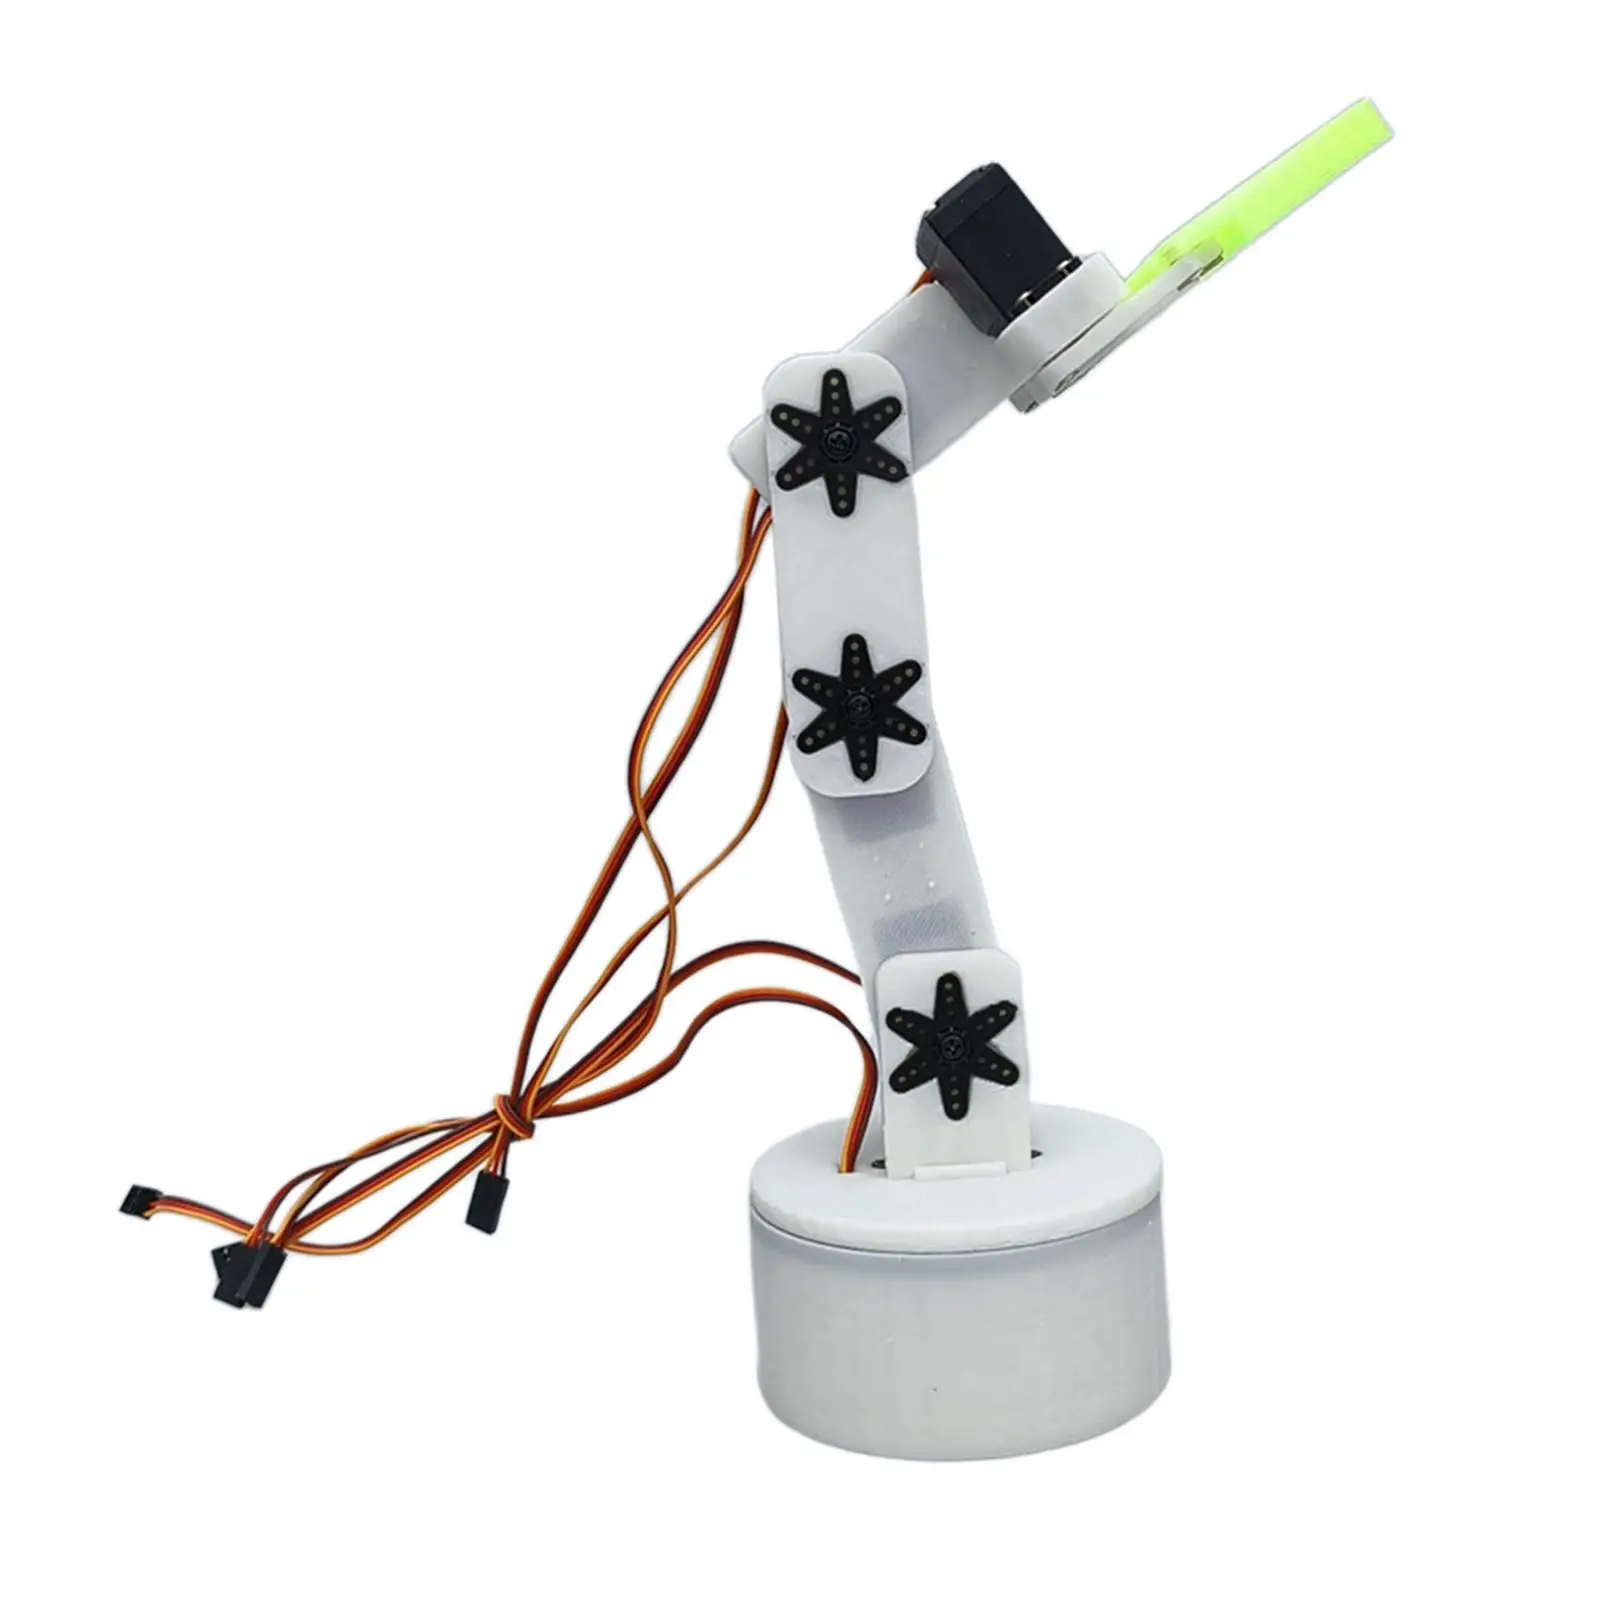 Robot Arm Kit Starter Kit Manipulator DIY Electronic Kits DIY Assembly Robotic Claw Mechanical Grab for Kids Teens Adults